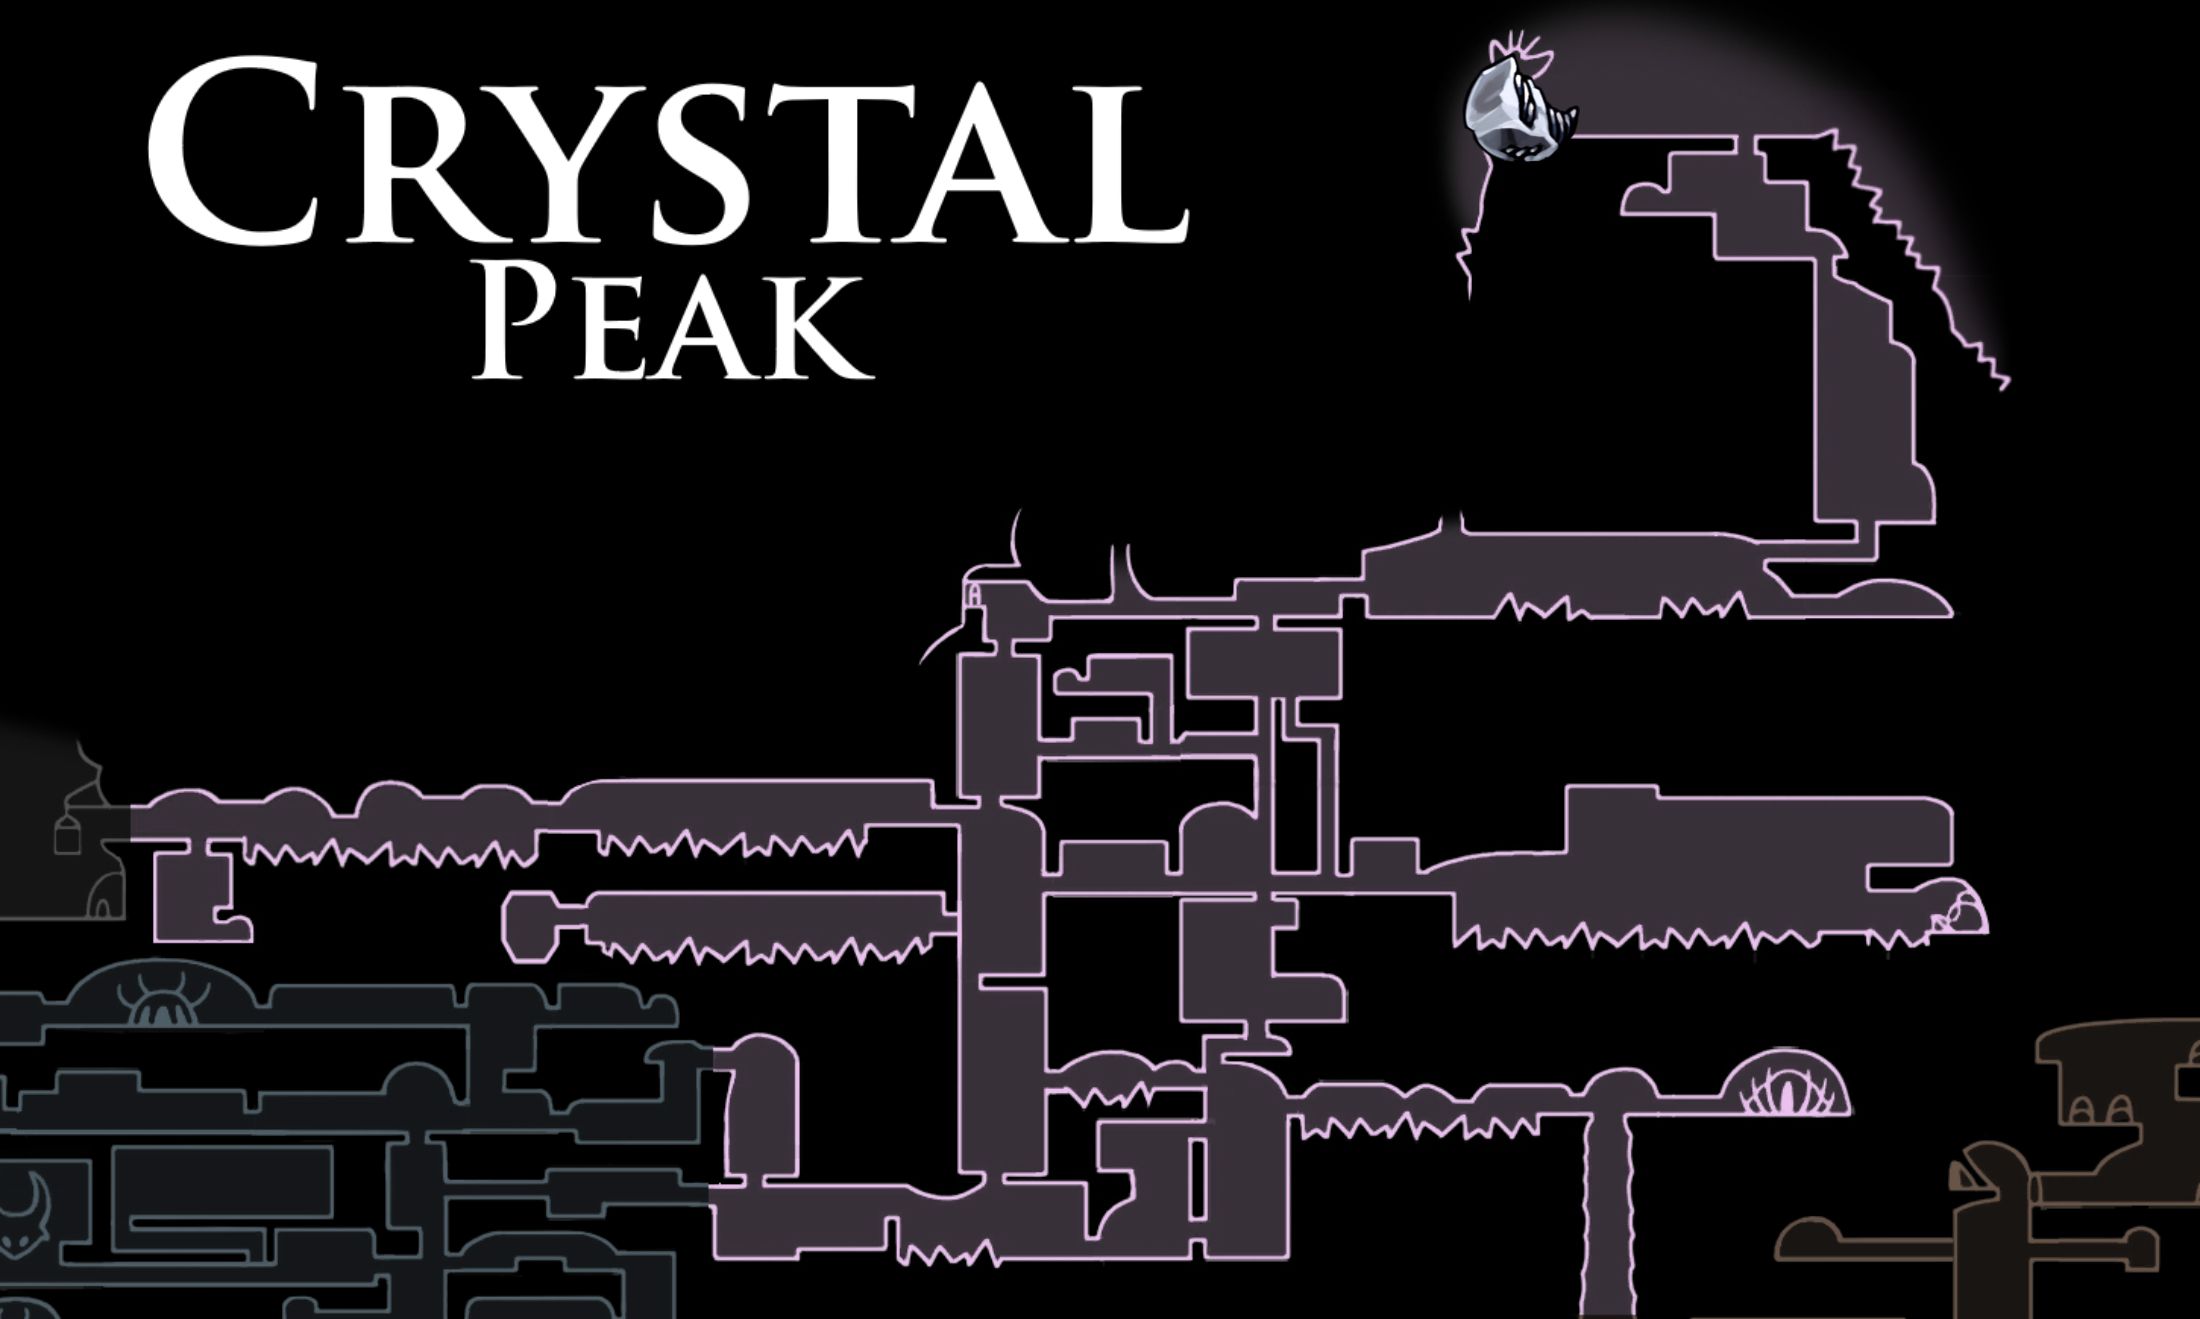 Холлоу найт пике. Кристальный пик Hollow Knight карта. Hollow Knight Crystal Peak Map. Карта кристального пика Холлоу Найт. Кристальный пик Hollow Knight.